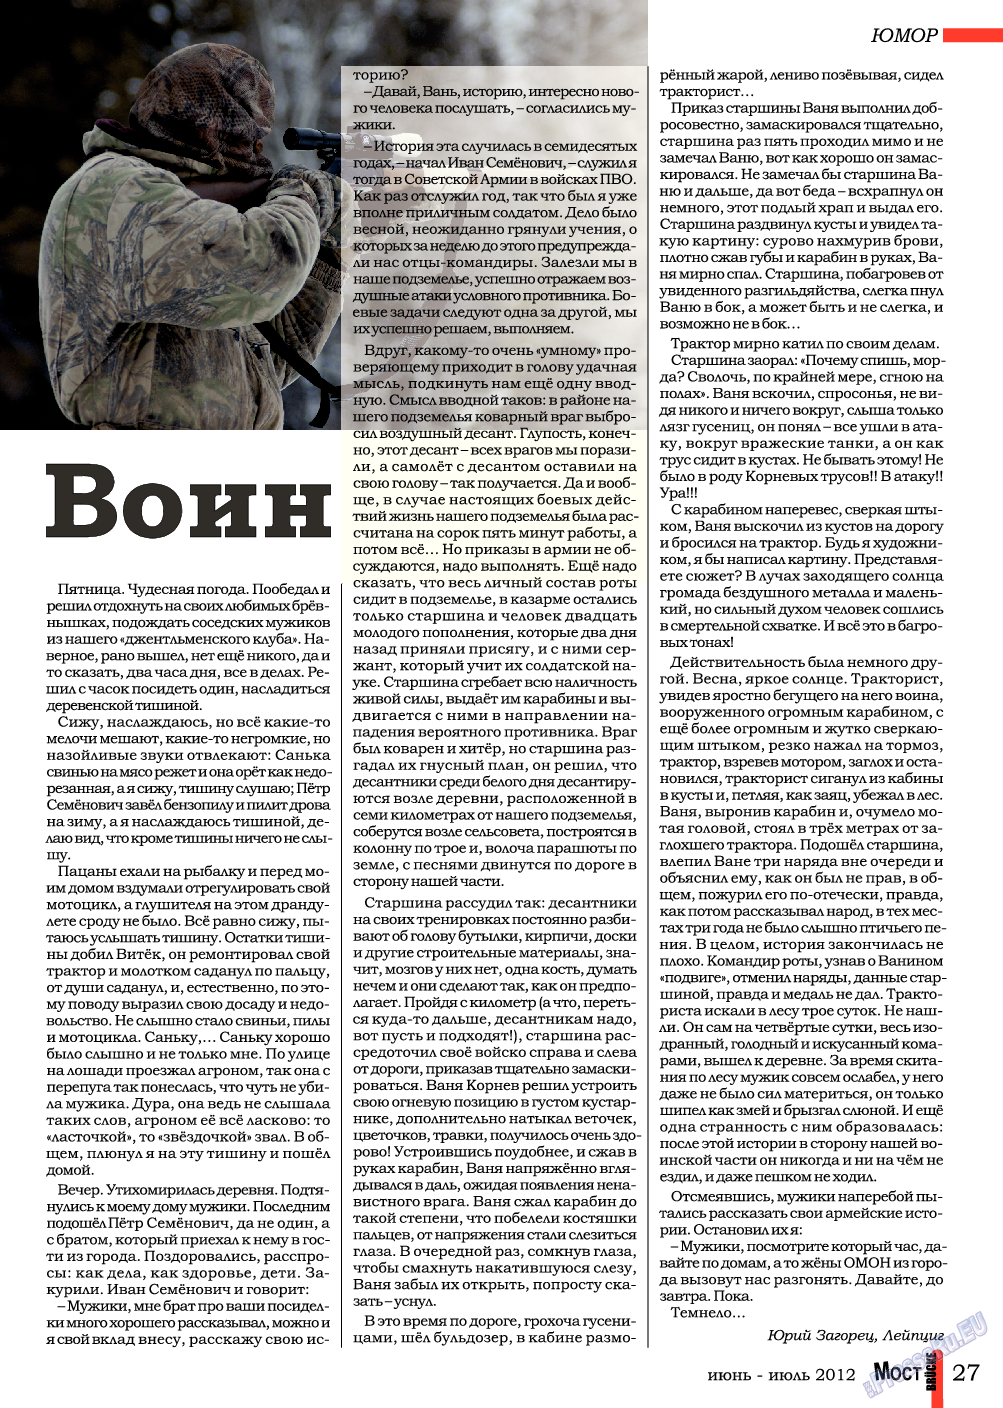 Мост, журнал. 2012 №6 стр.27